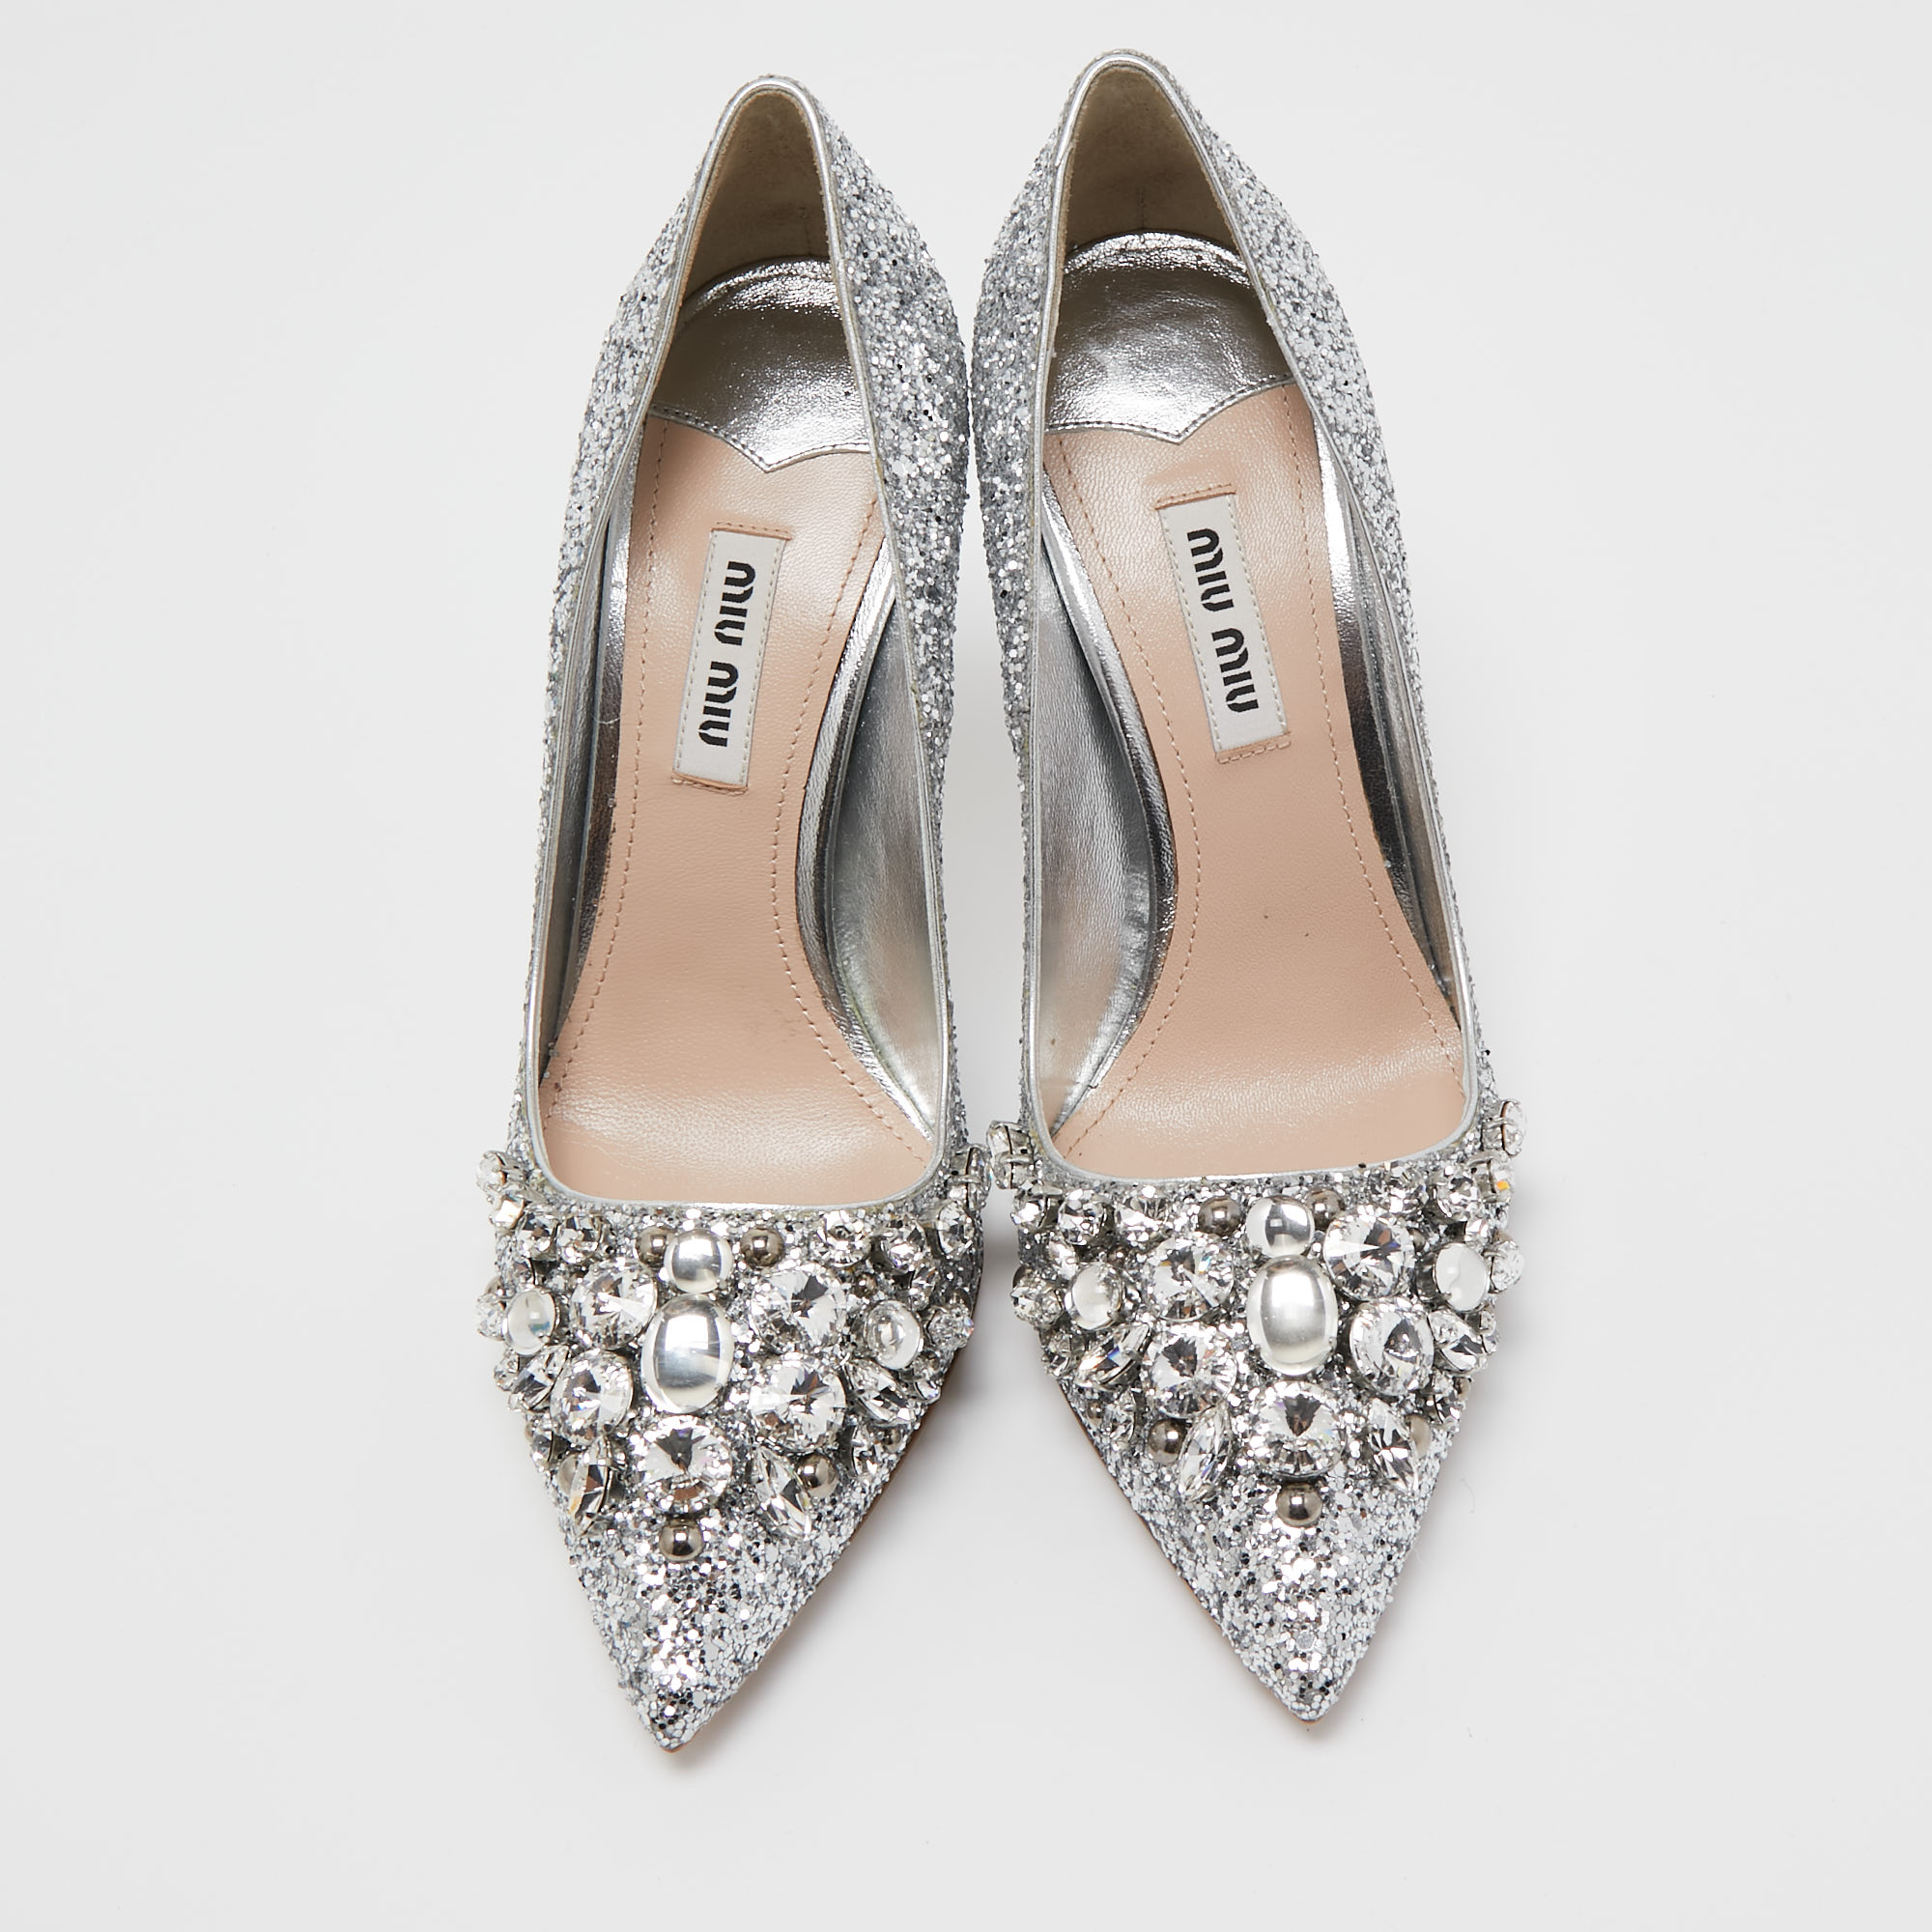 Miu Miu Silver Glitter Crystal Embellished Pointed Toe Pumps Size 35.5